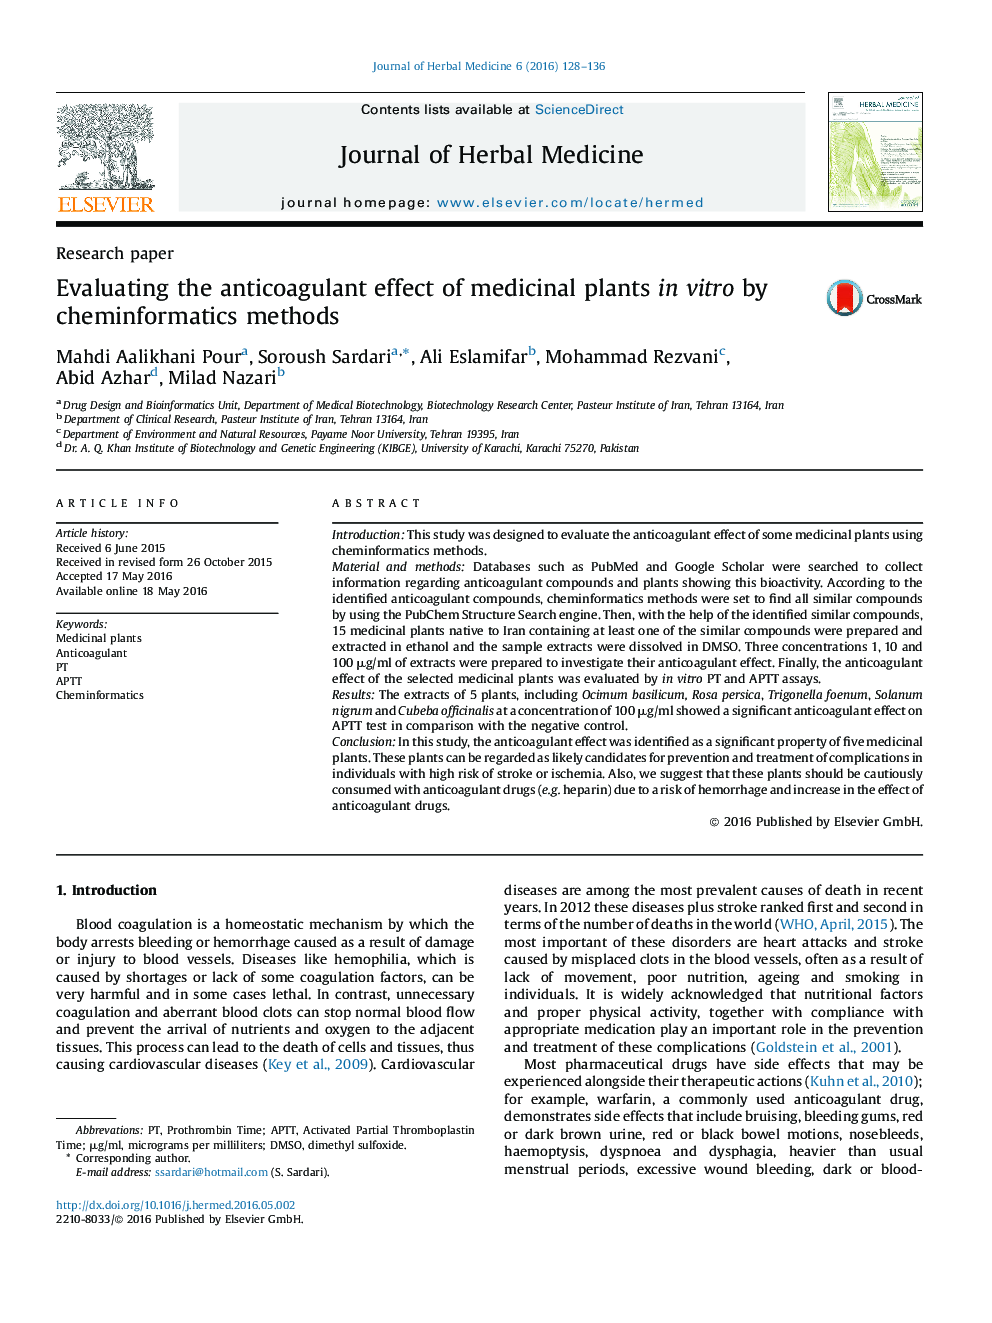 Evaluating the anticoagulant effect of medicinal plants in vitro by cheminformatics methods